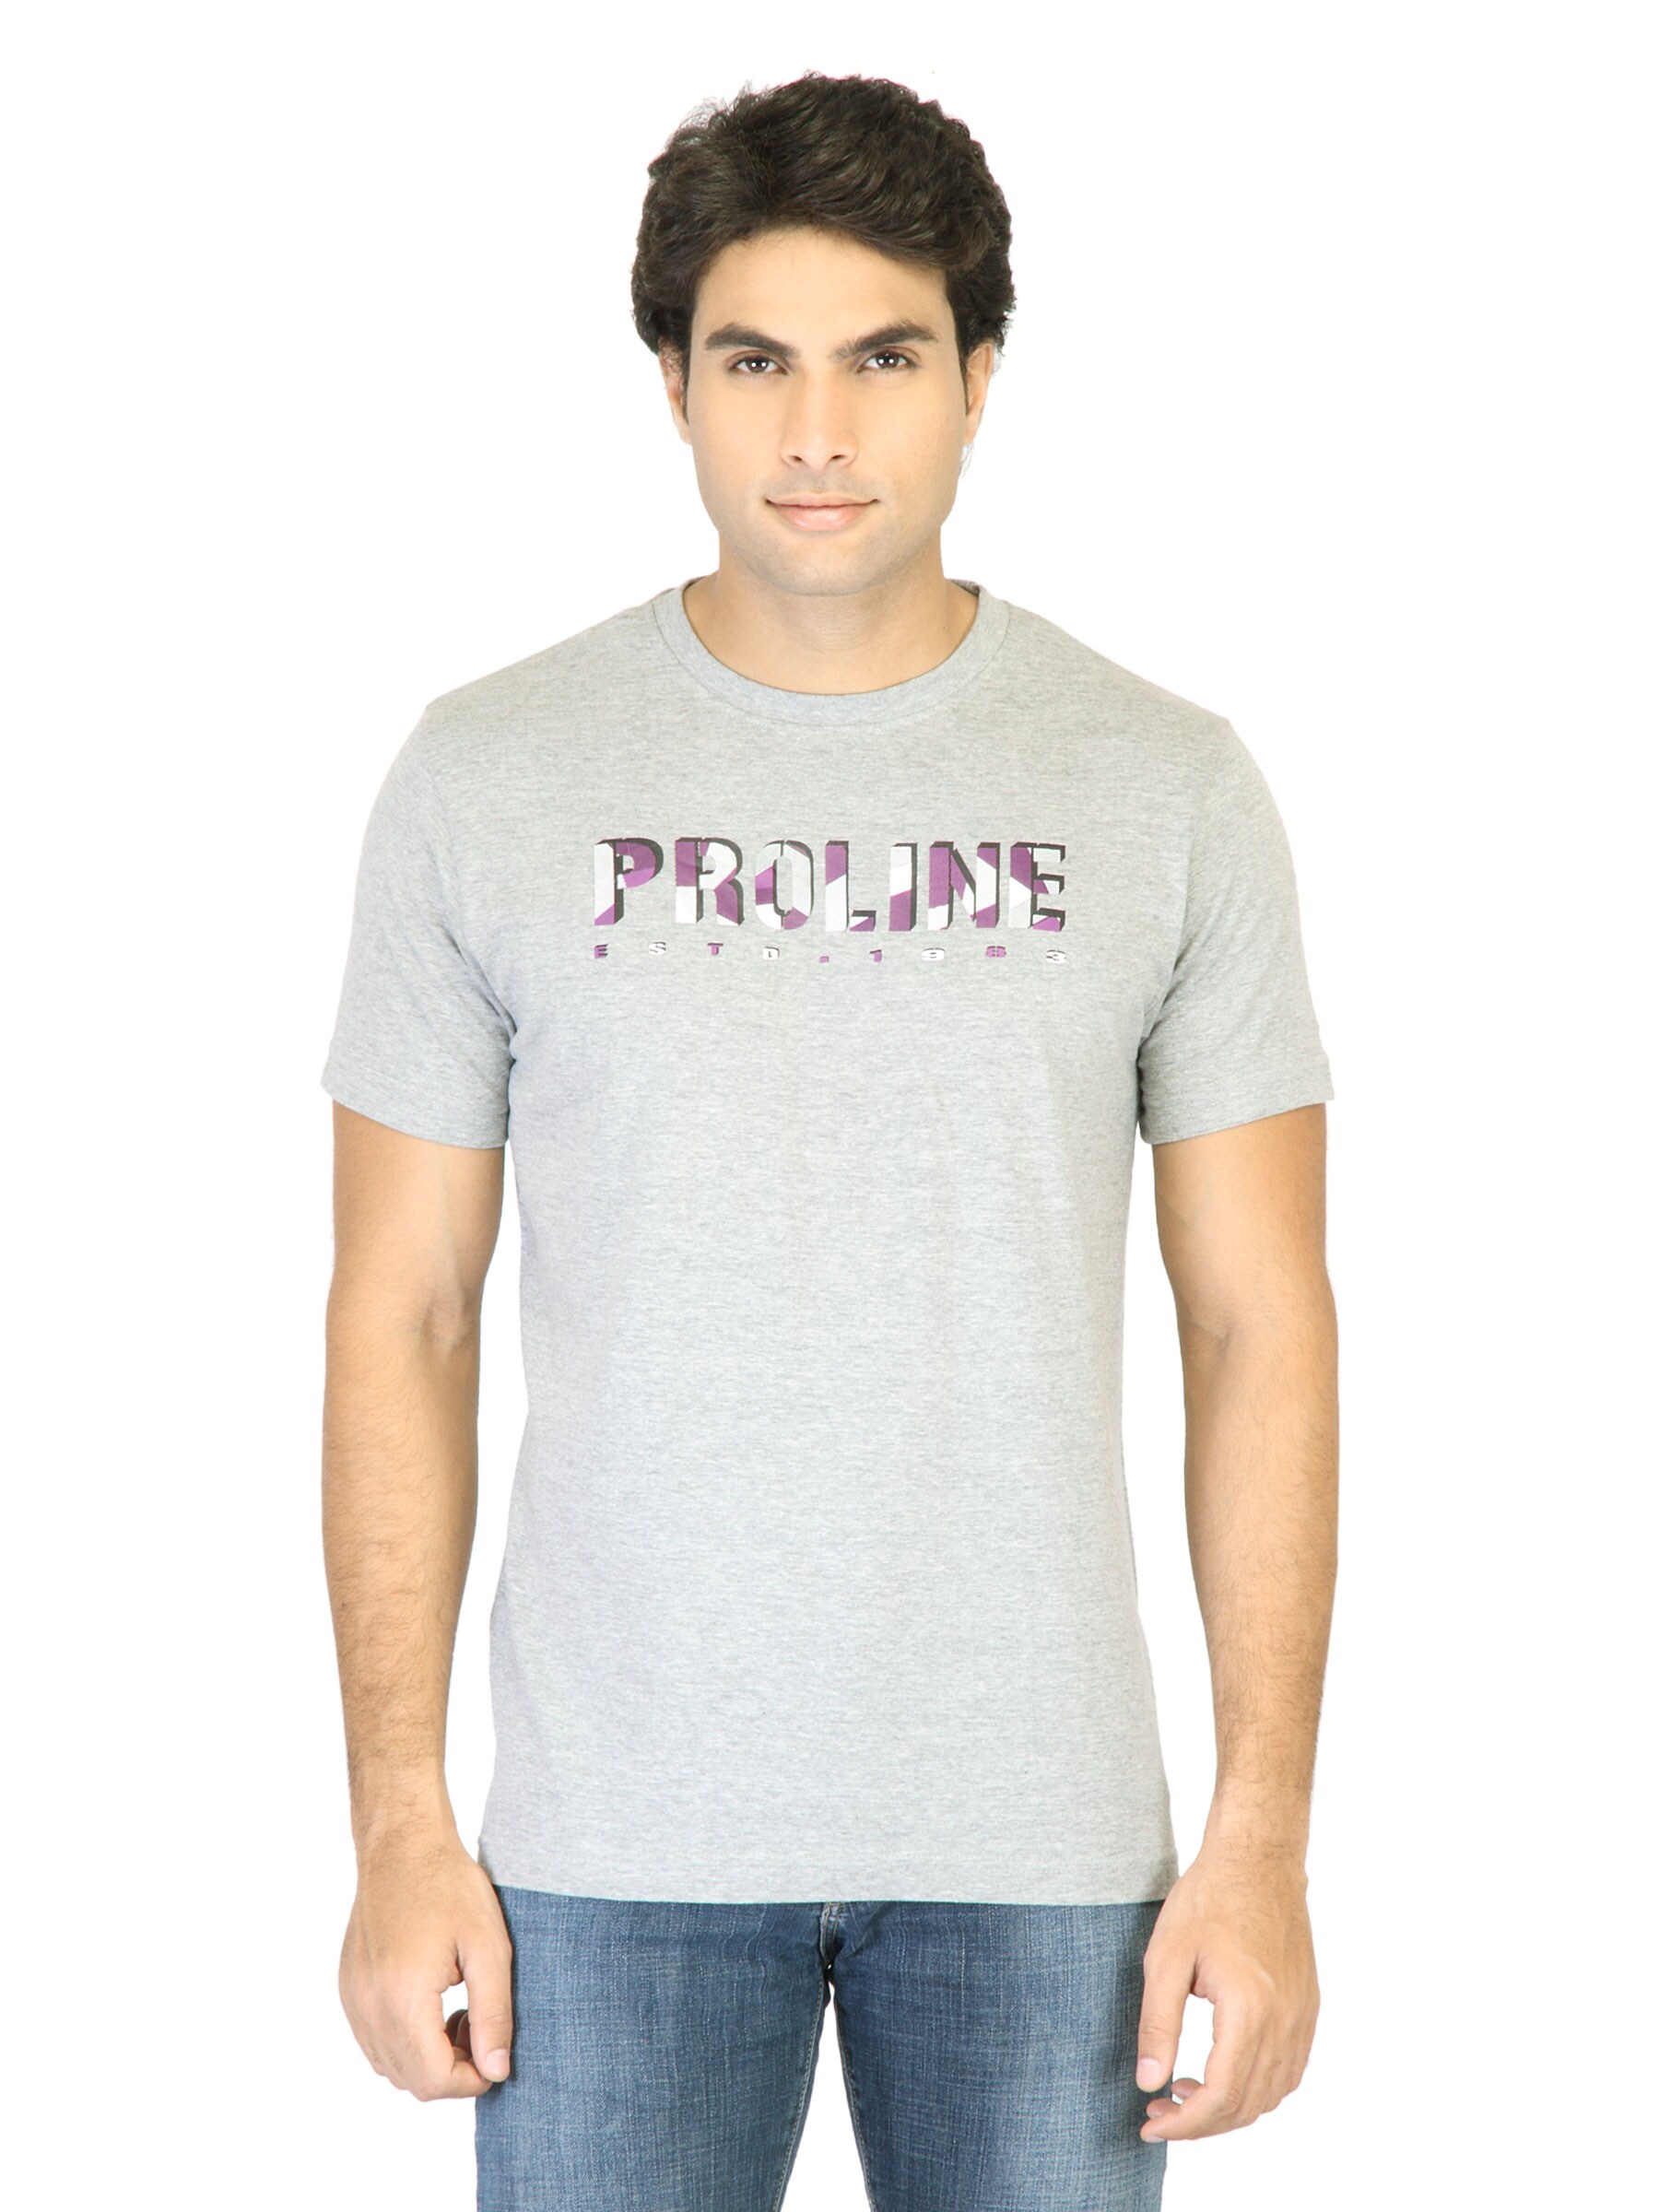 Proline Men Grey T-shirt with Printed Detail